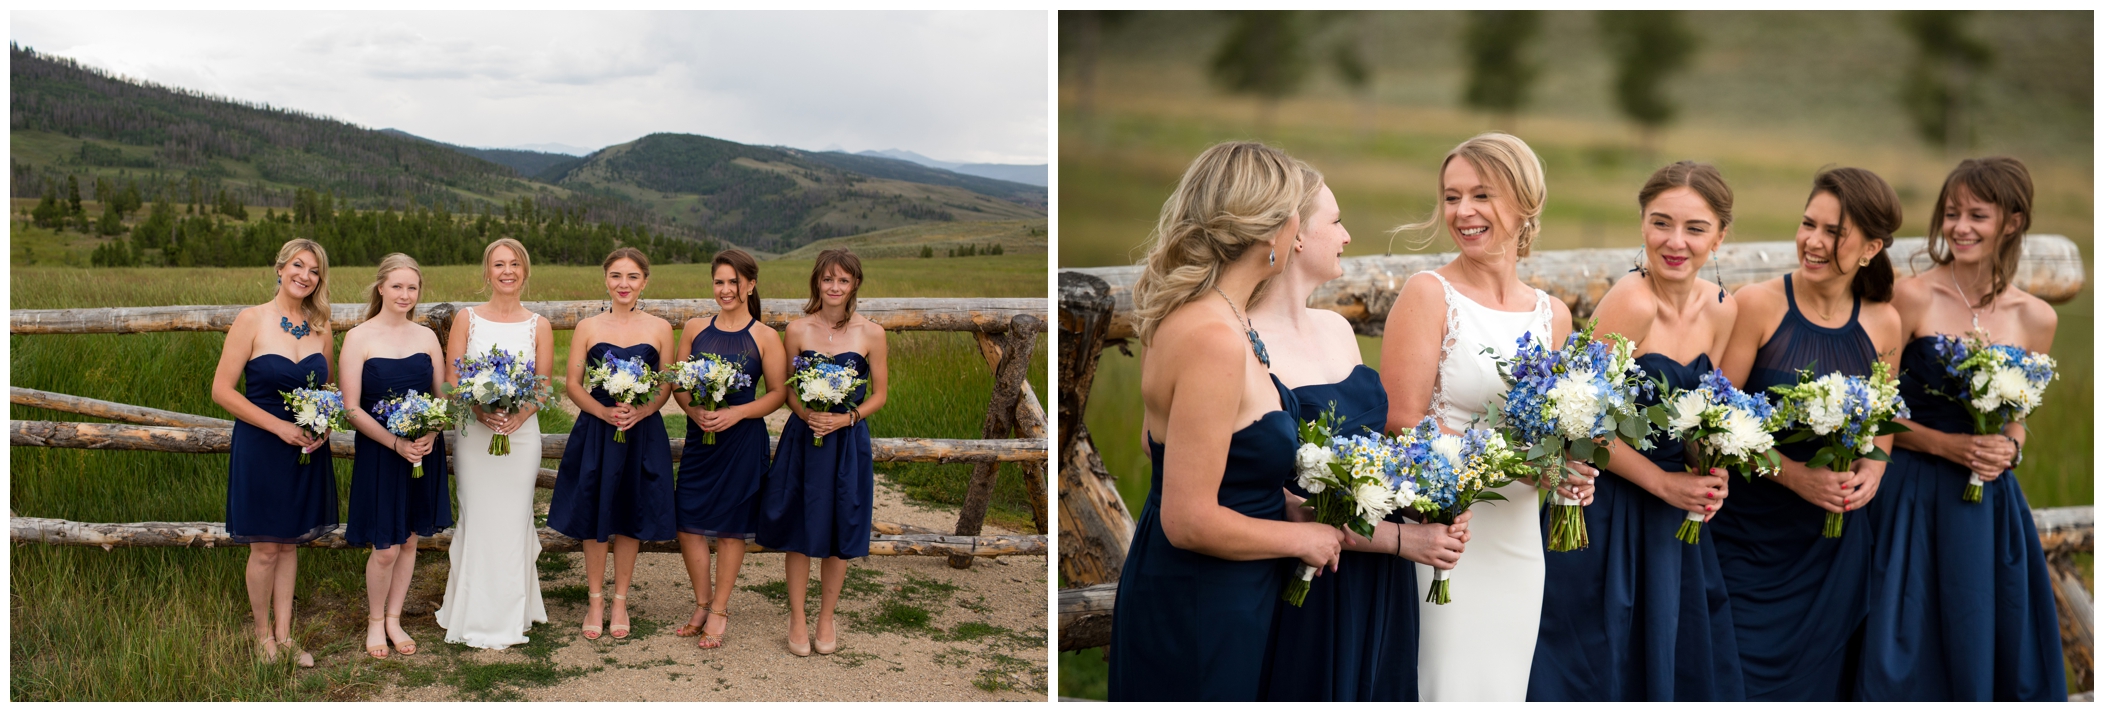 short navy blue bridesmaids dresses at Colorado mountain wedding 